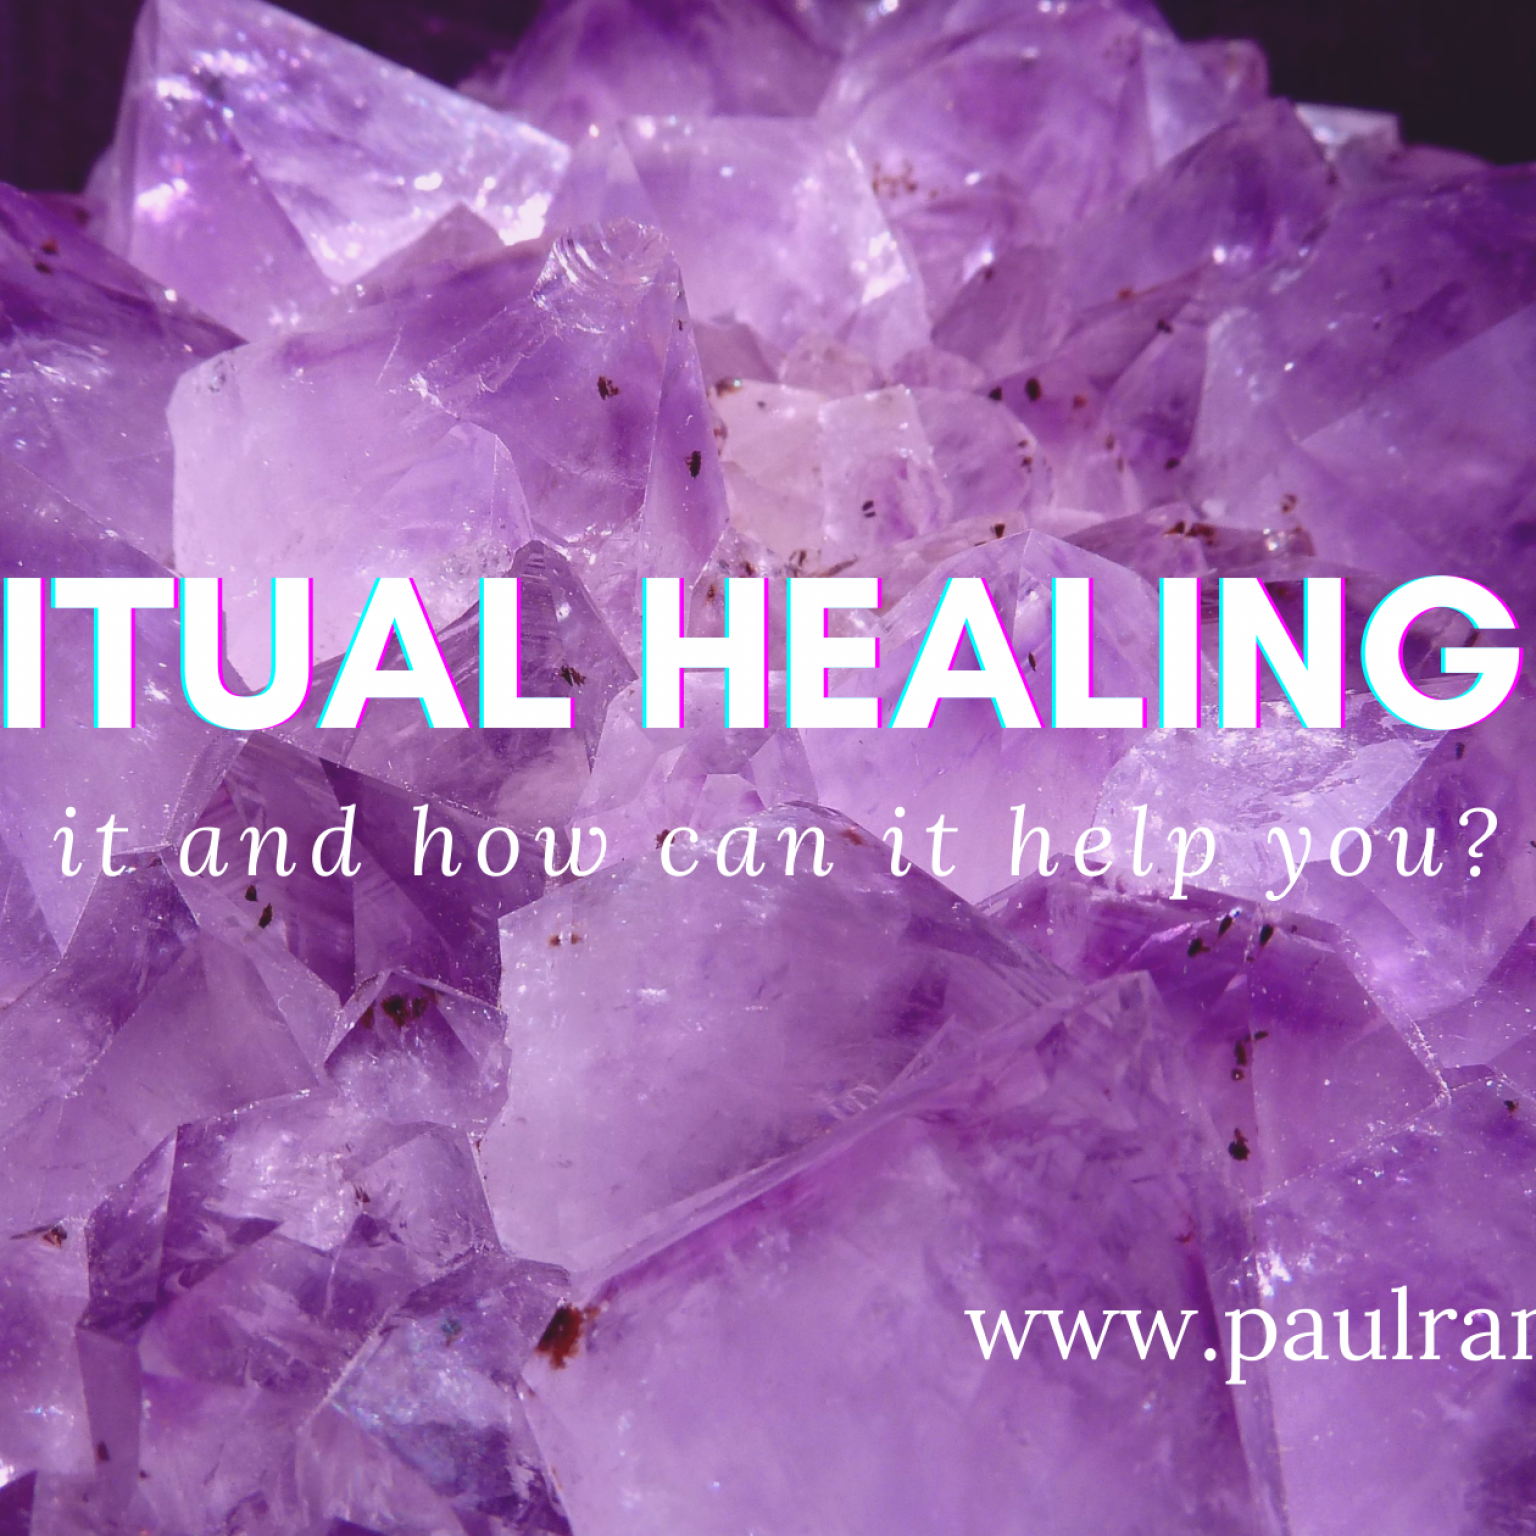 spiritual healing leeds